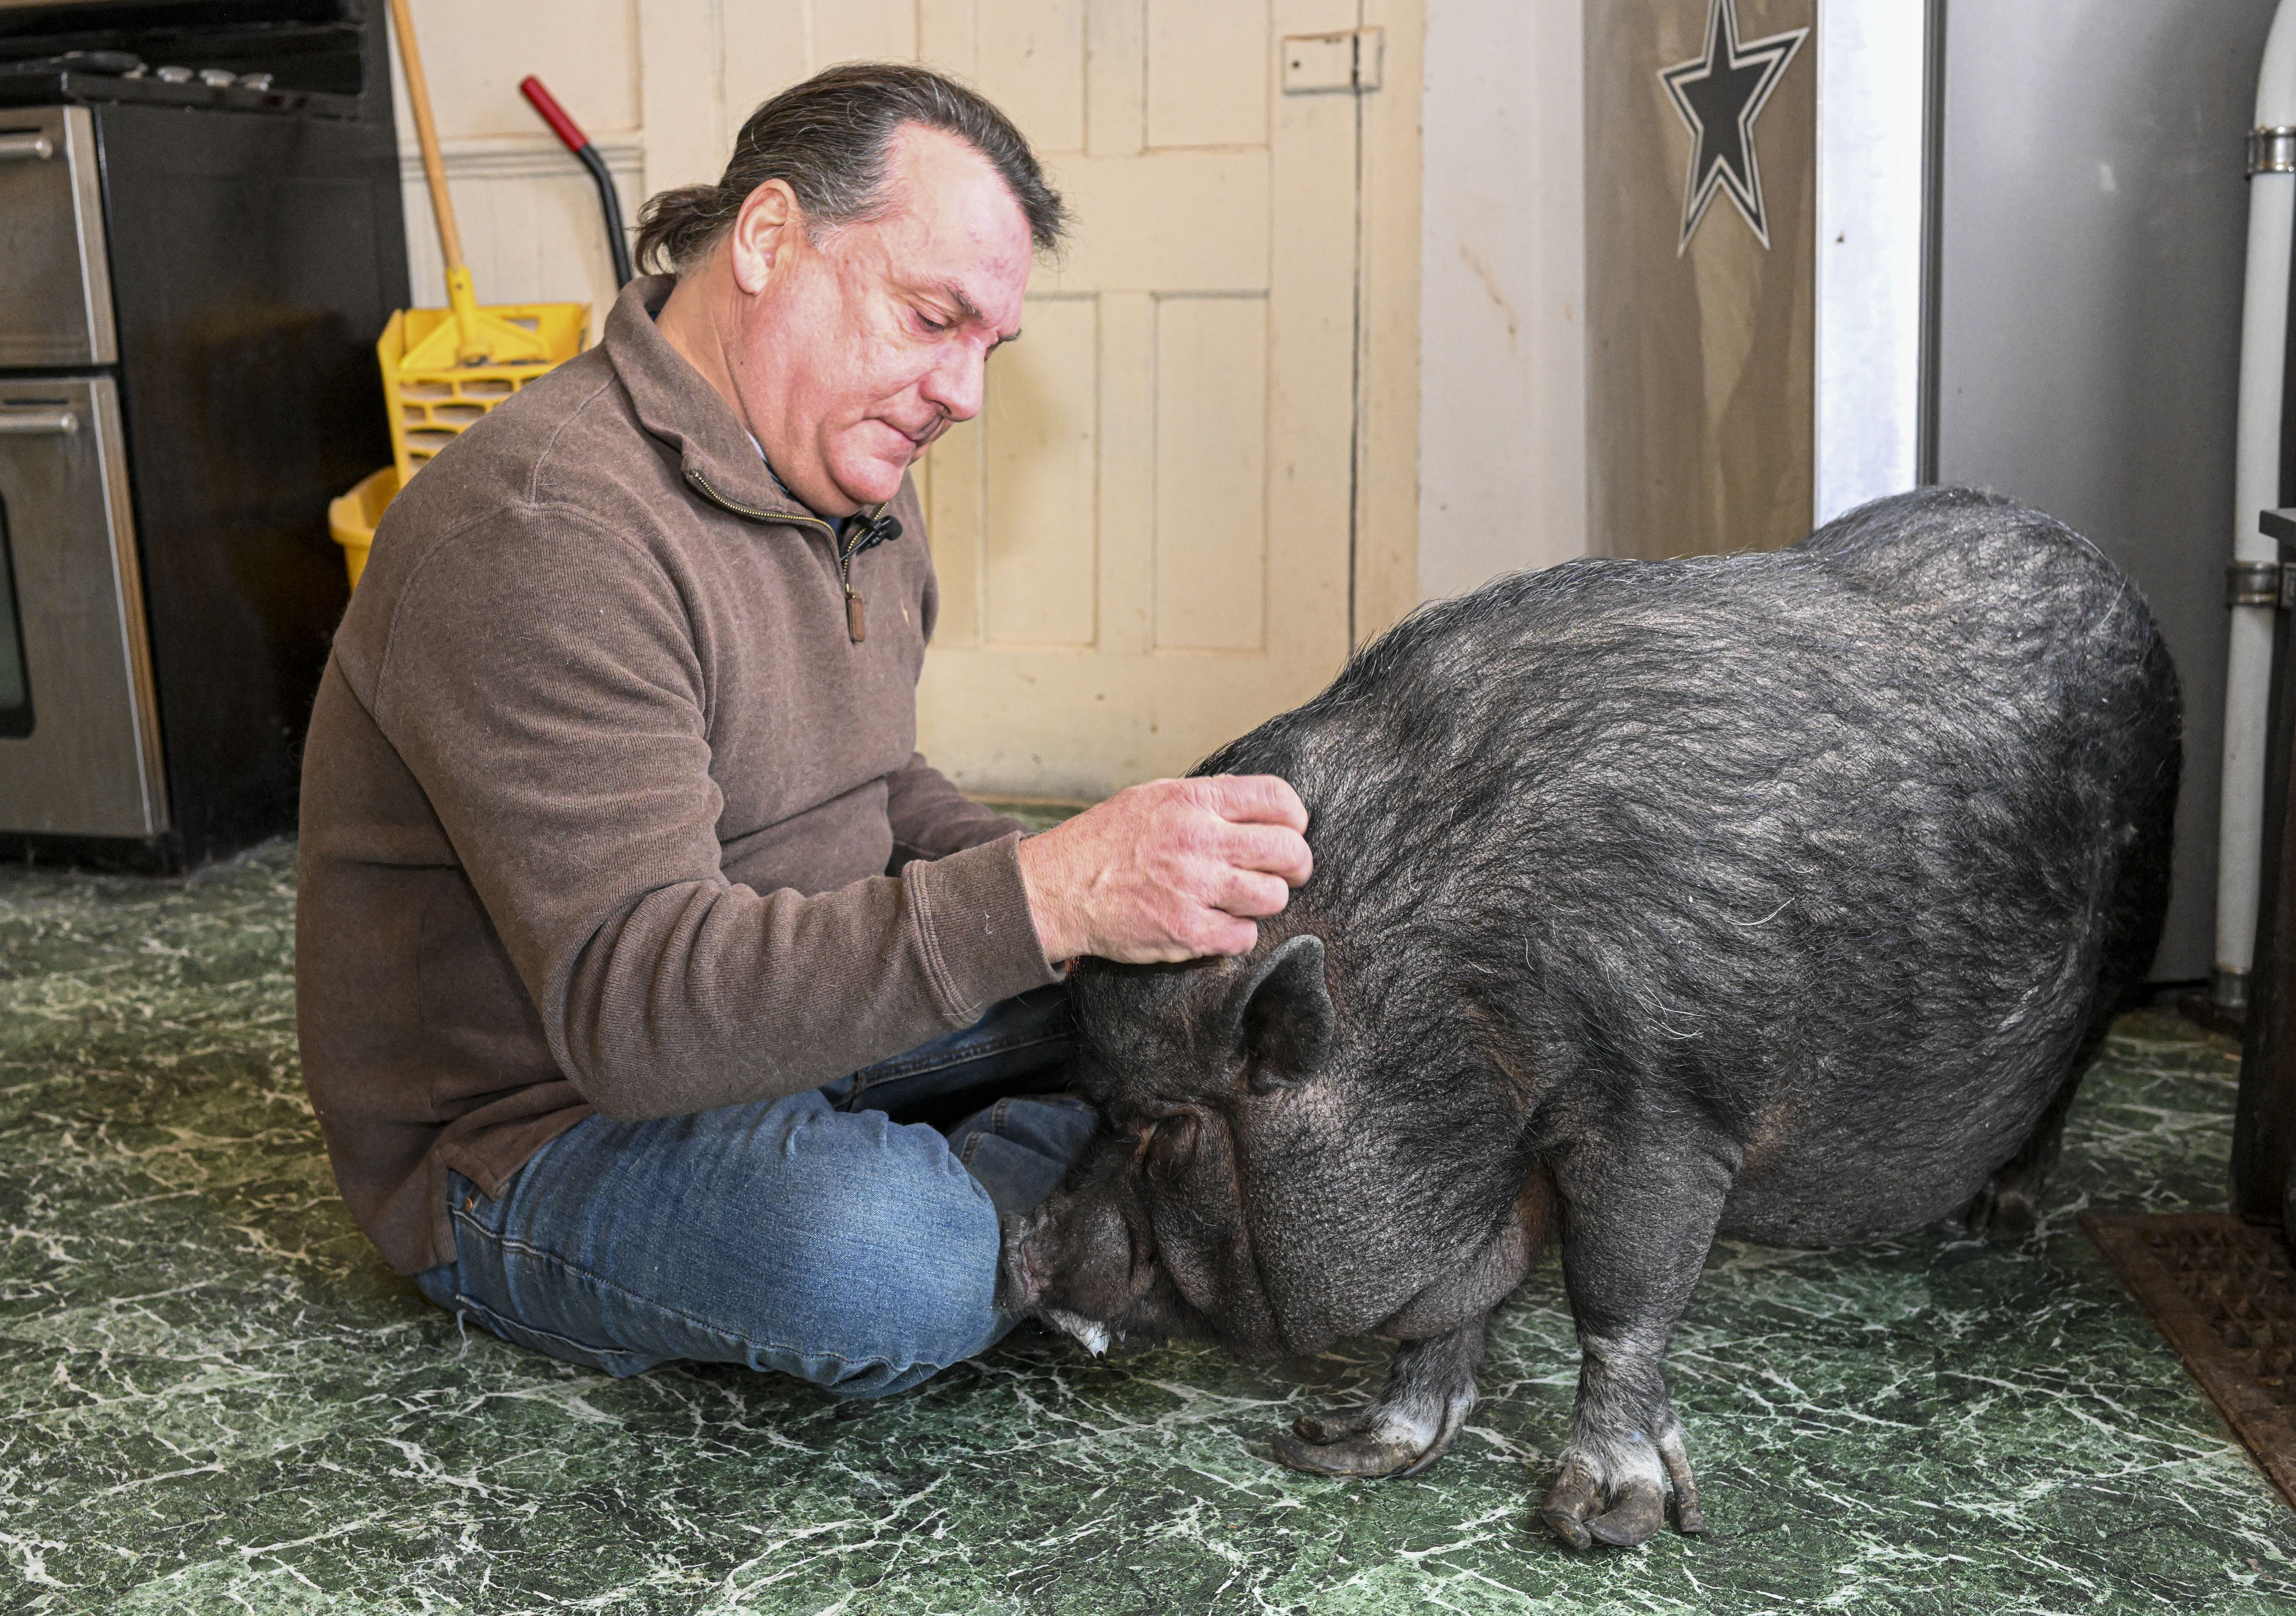 Emotional support or hogwash? Man fights to keep his pet pig